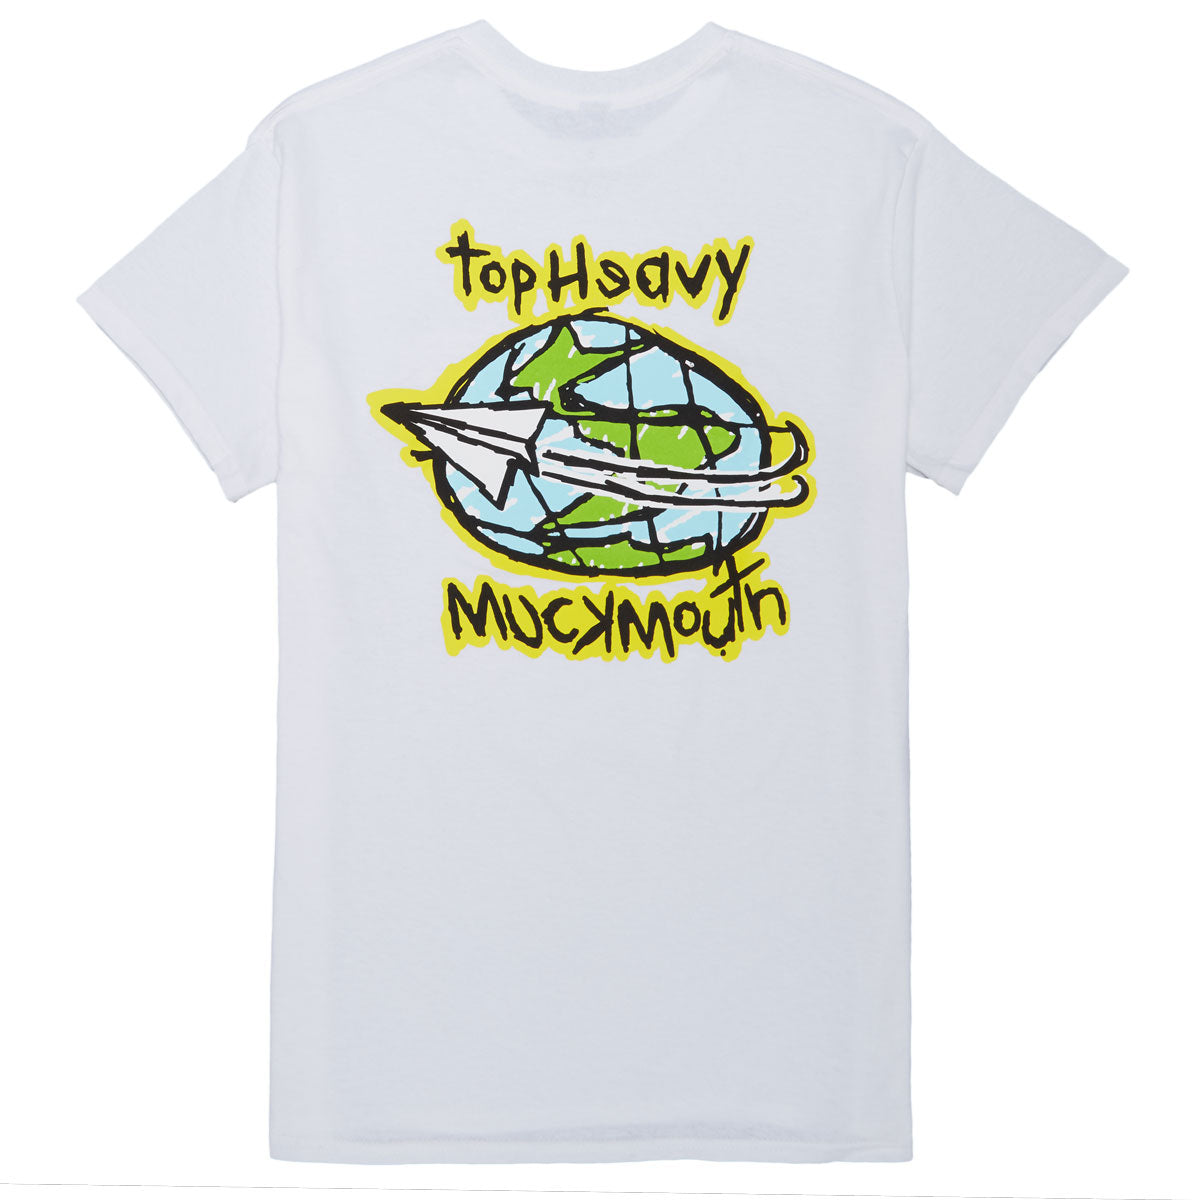 Top Heavy x Muckmouth T-Shirt - White image 1